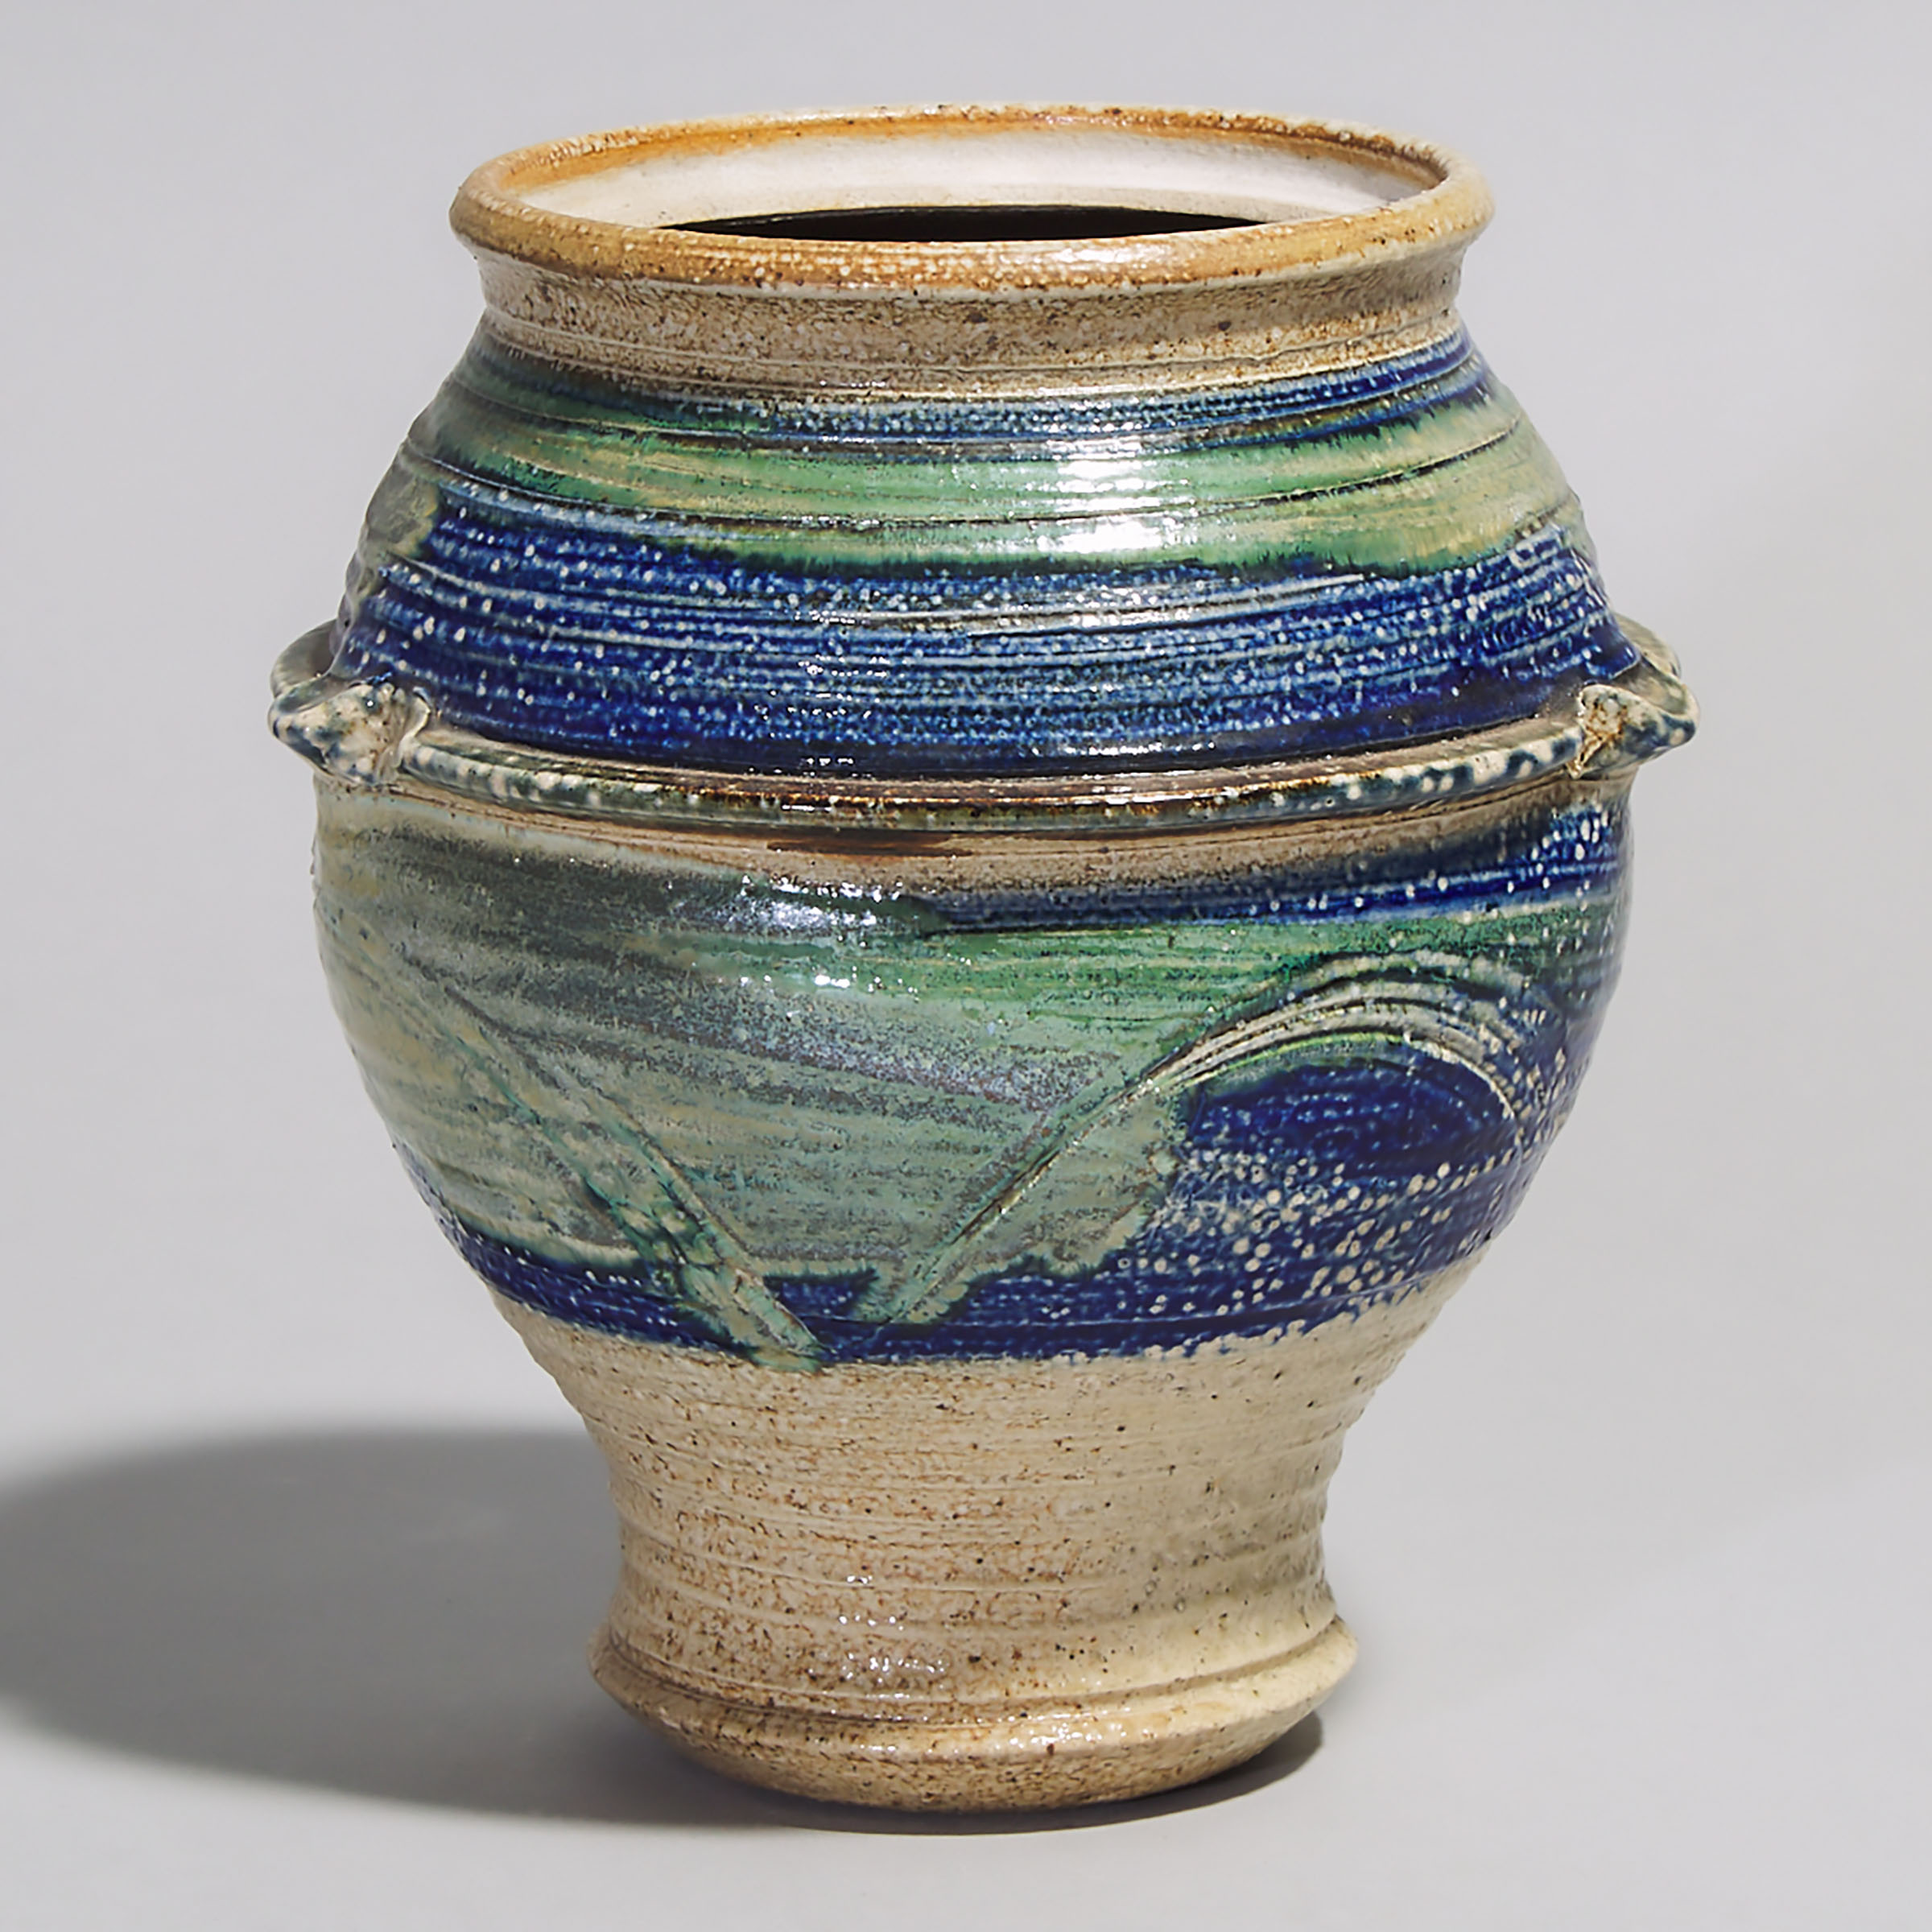 Wayne Cardinalli (Canadian, b.1944), Salt Glazed Stoneware Vase, c.1974